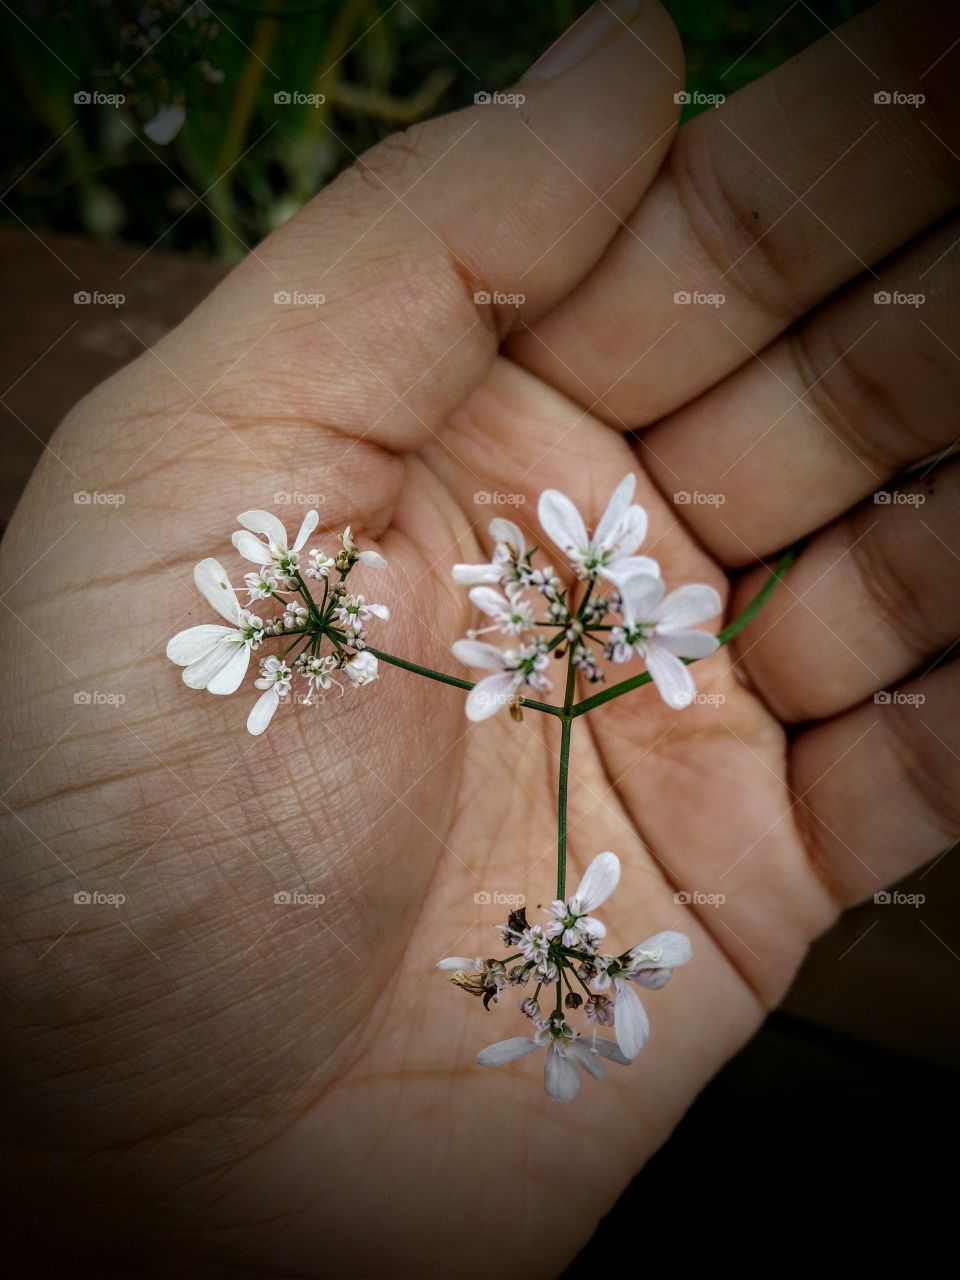 tiny flowers closeup